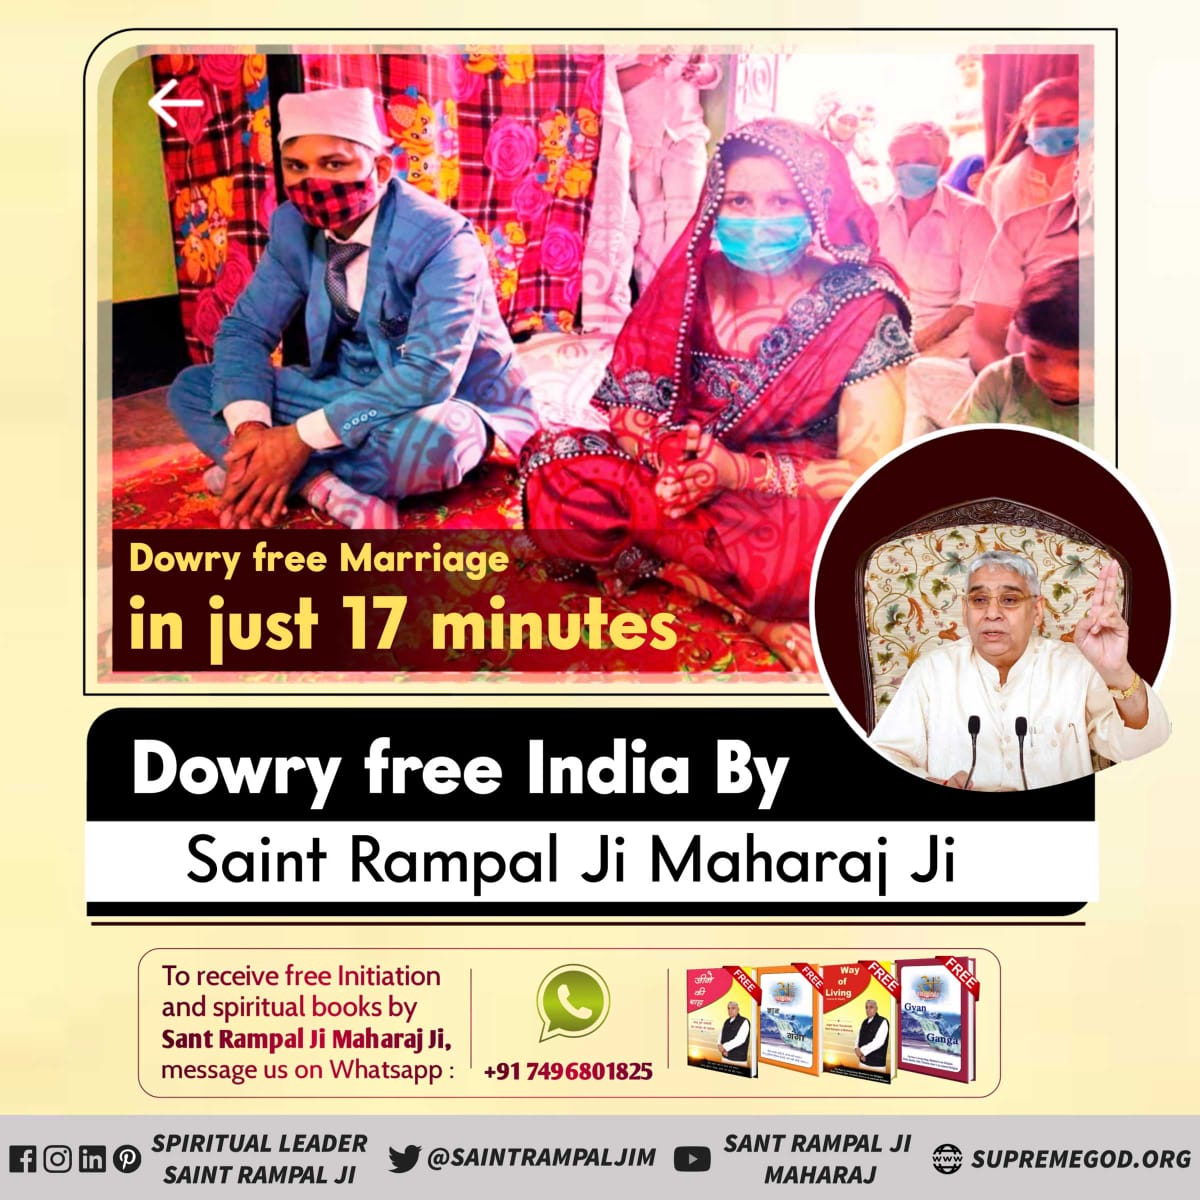 #दहेज_दानव_का_अंत_हो
Sant Rampal Ji Maharaj Ji's followers are conducting dowry free marriages in just 17 minutes.

Biggest War Against Dowry
Sant Rampal Ji Maharaj